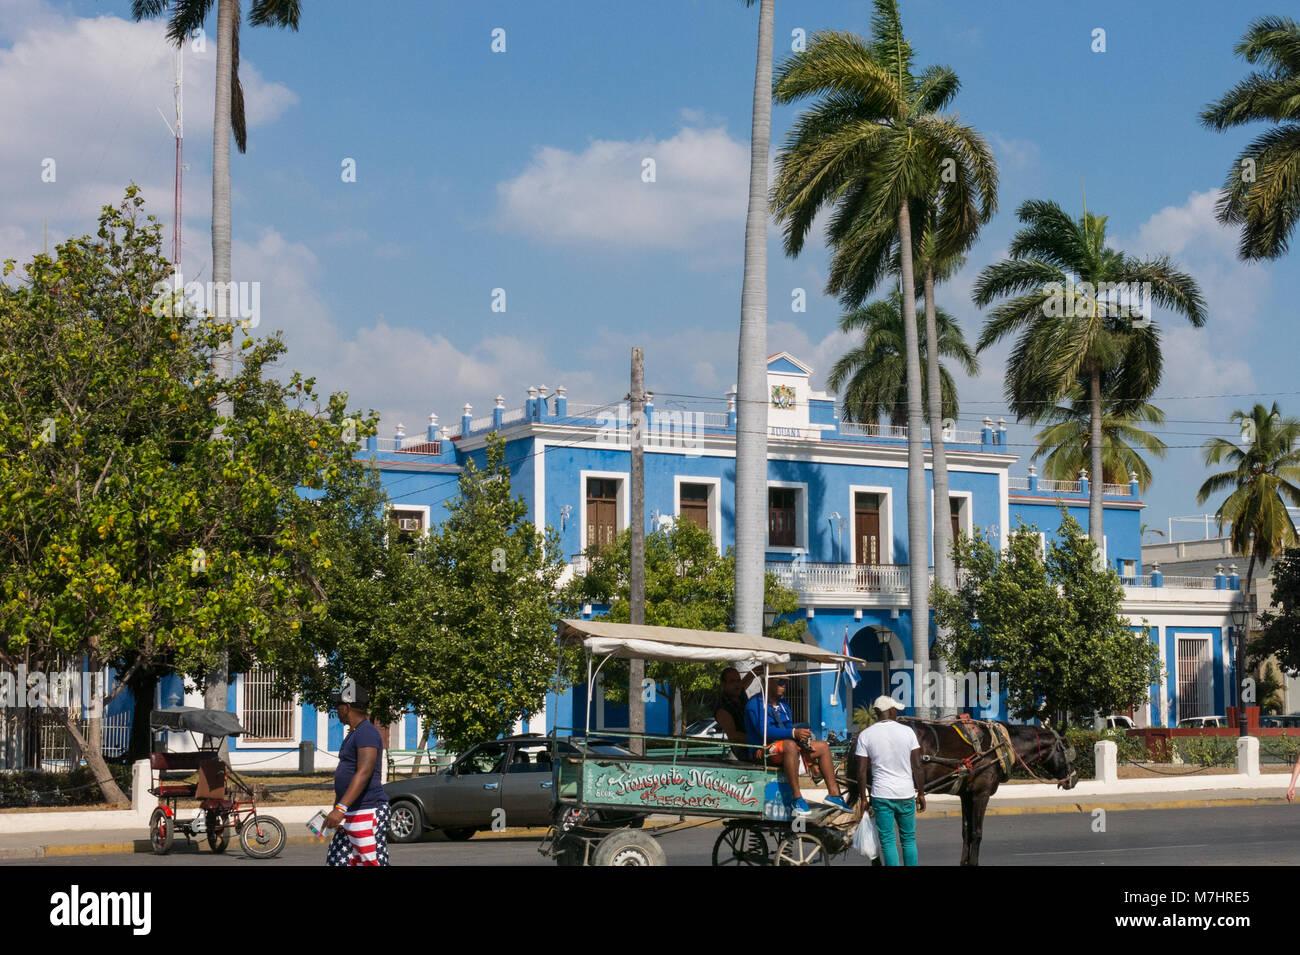 CIENFUEGOS, CUBA - 3 janvier 2017 : Panorama du front de mer de la ville de Cienfuegos. Île de Cuba. Banque D'Images